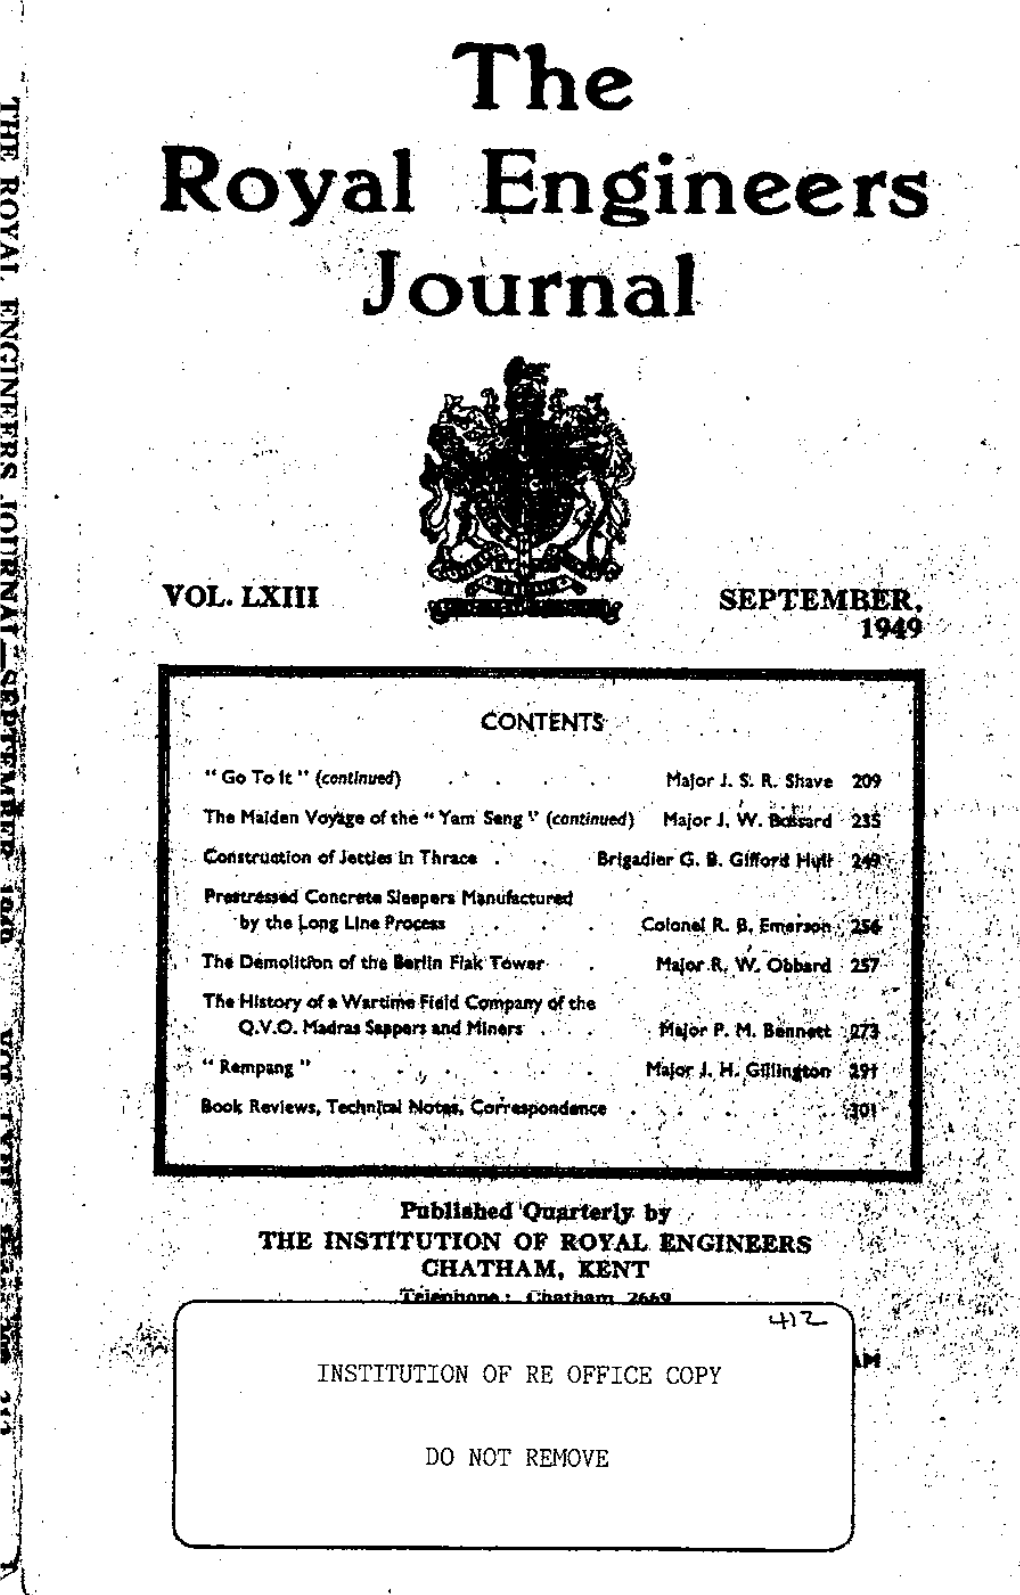 The Royal J: Ngineers Journal